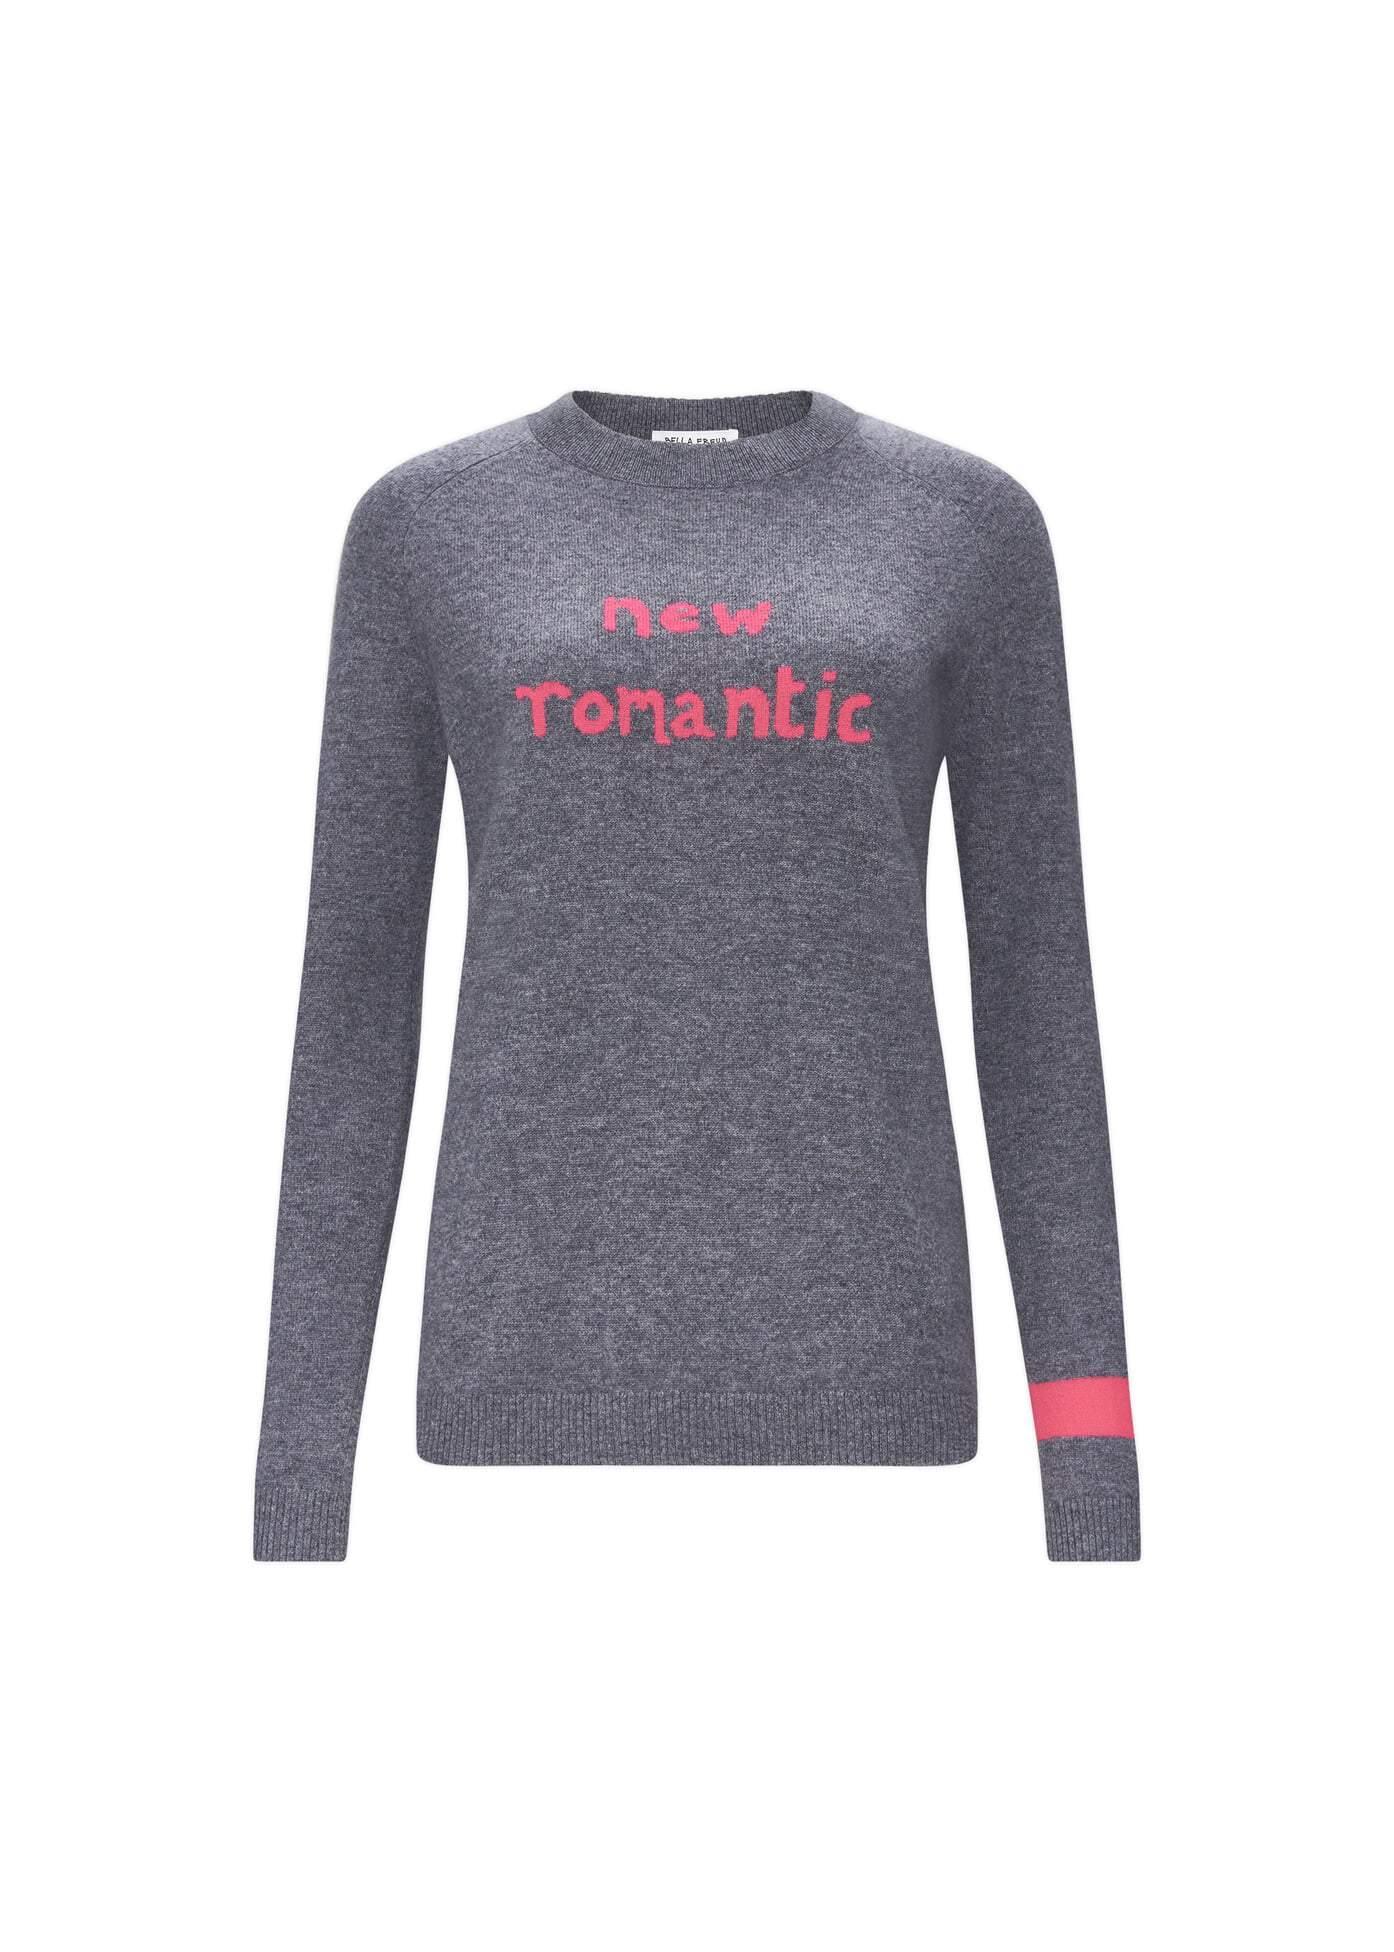 bella freud new romantic cashmere jumper